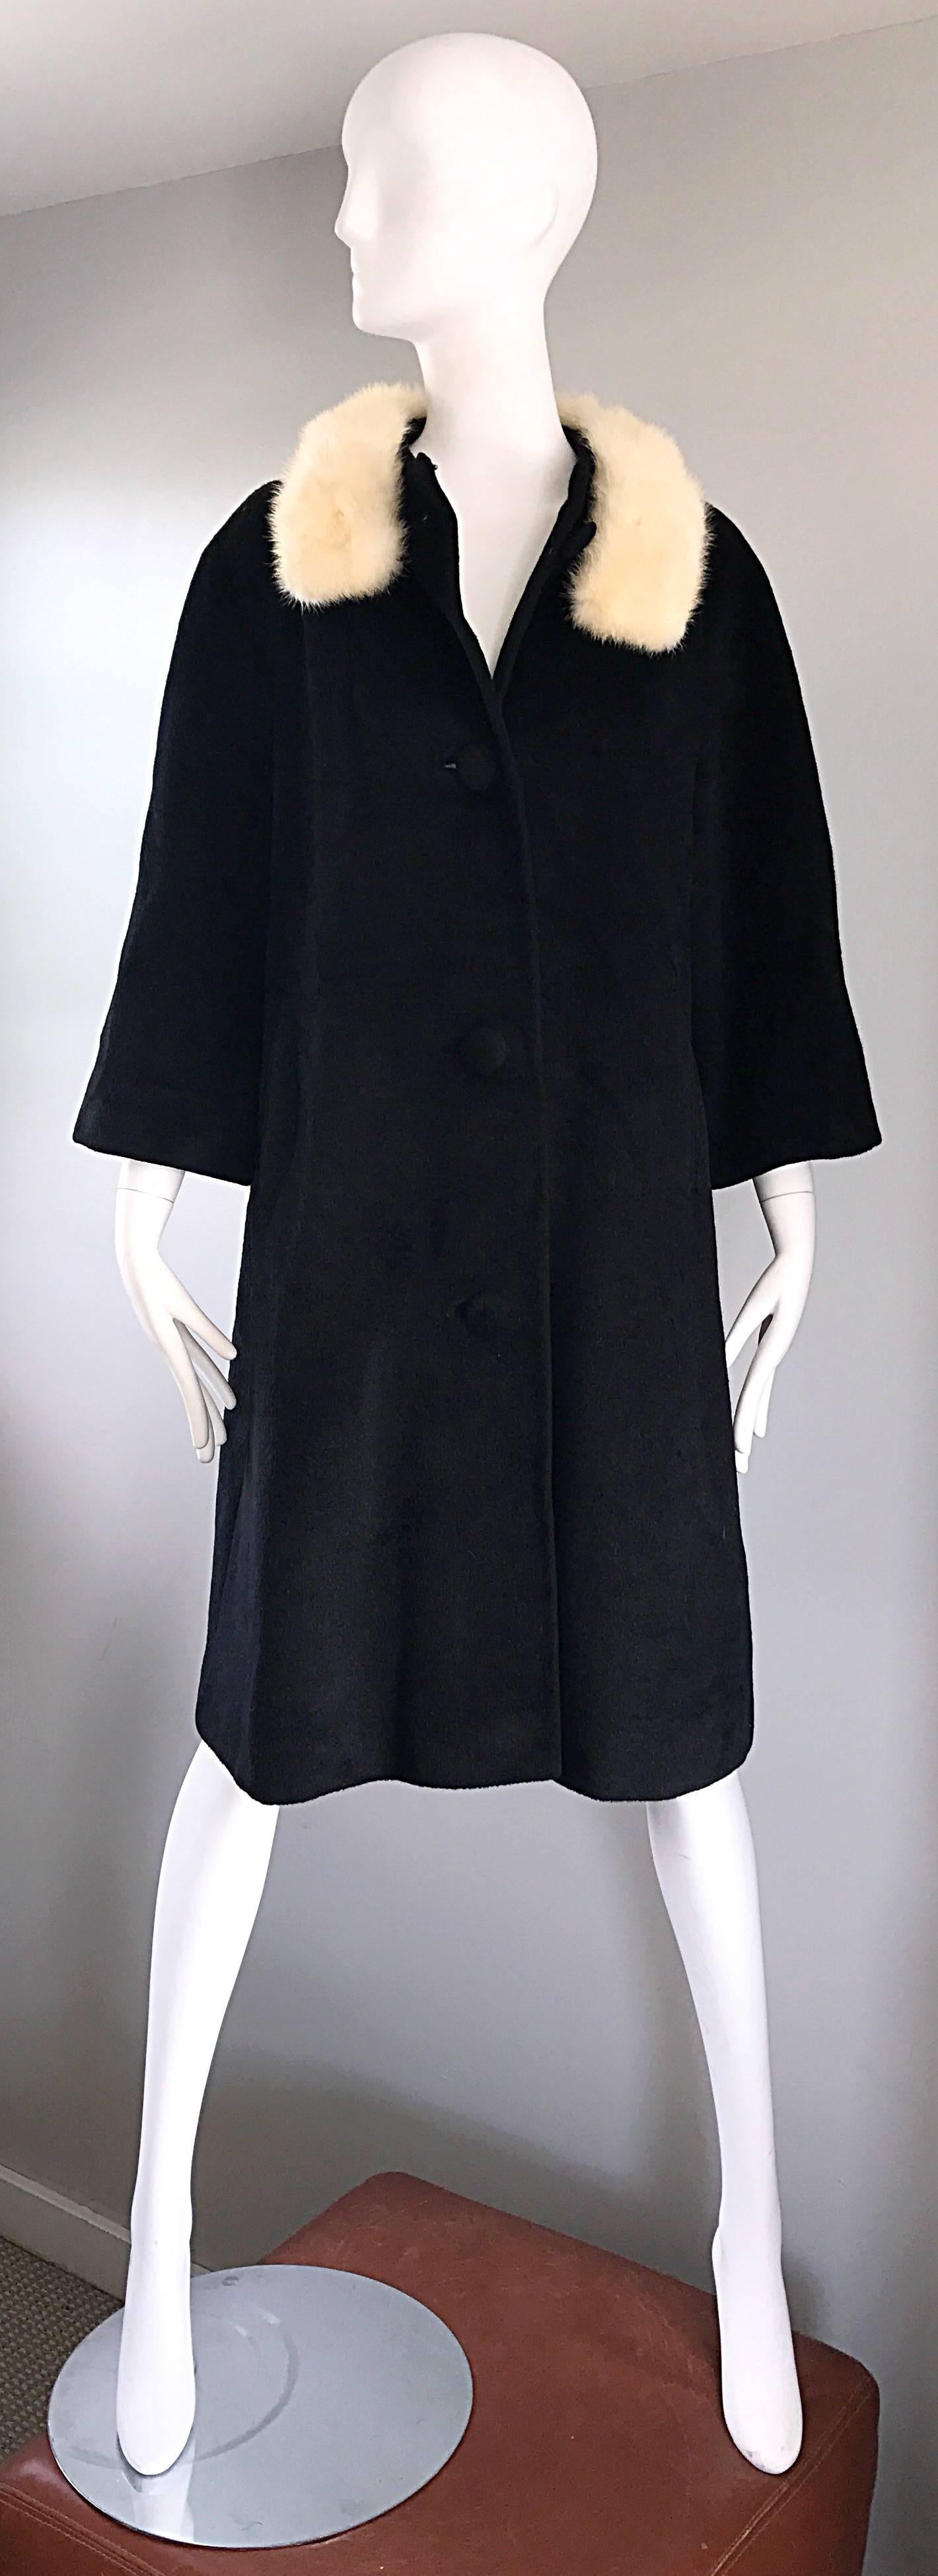 Lilli Ann 1960s Black and White Wool + Mink Fur Vintage 60s Swing Jacket Coat  For Sale 1